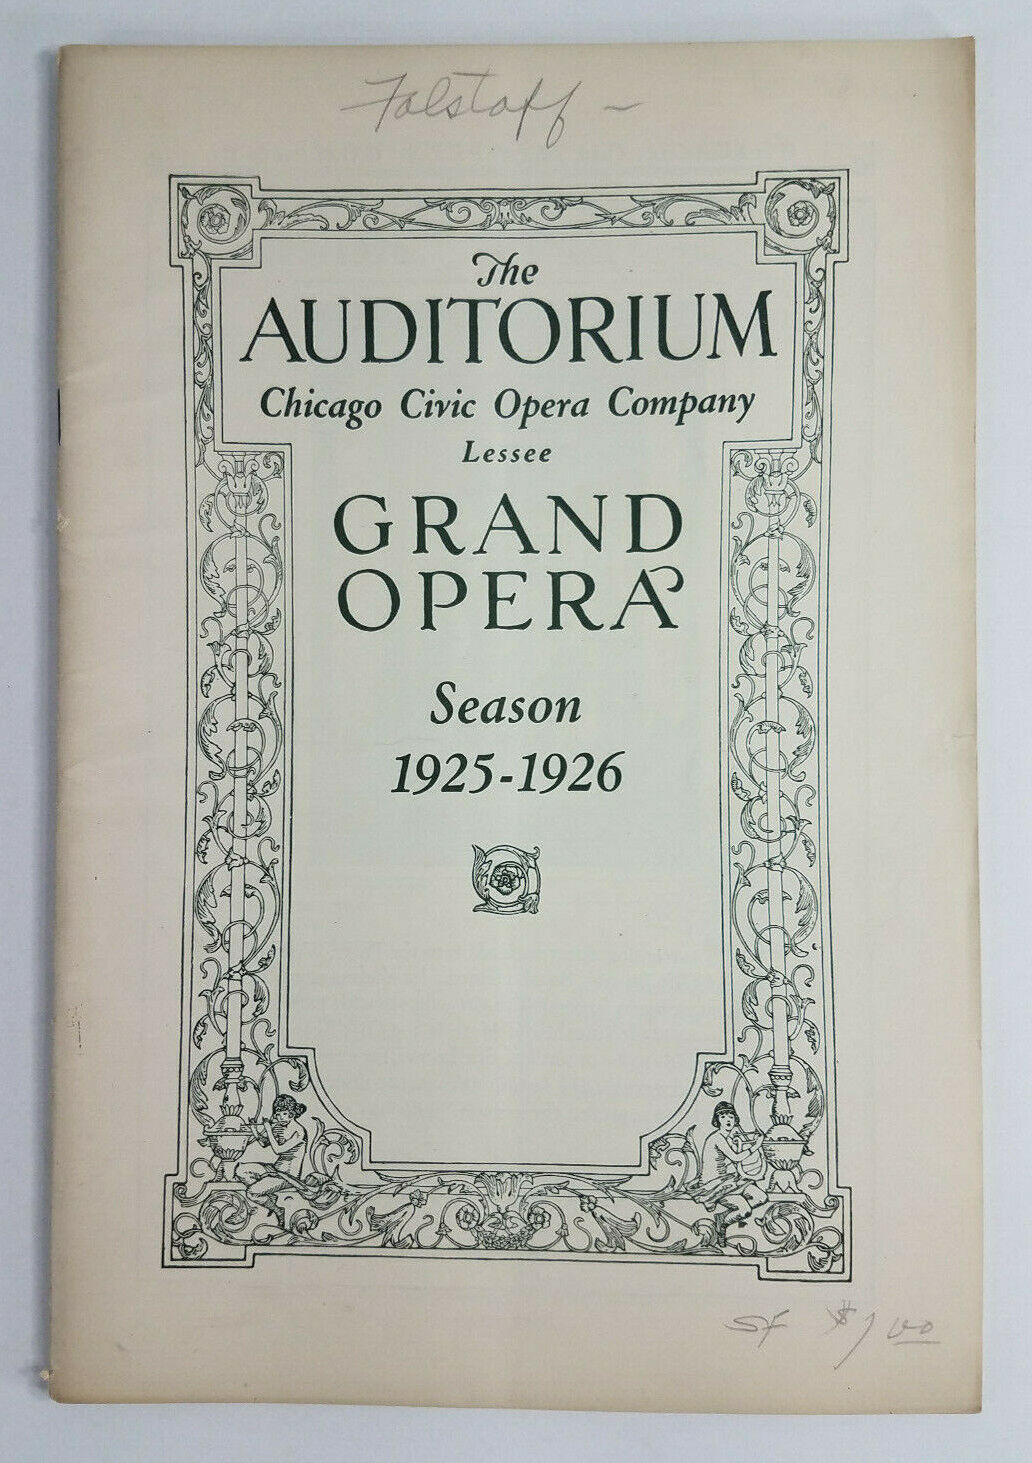 The Auditorium Chicago Civic Grand Opera 1925-1926 Falstaff program playbill